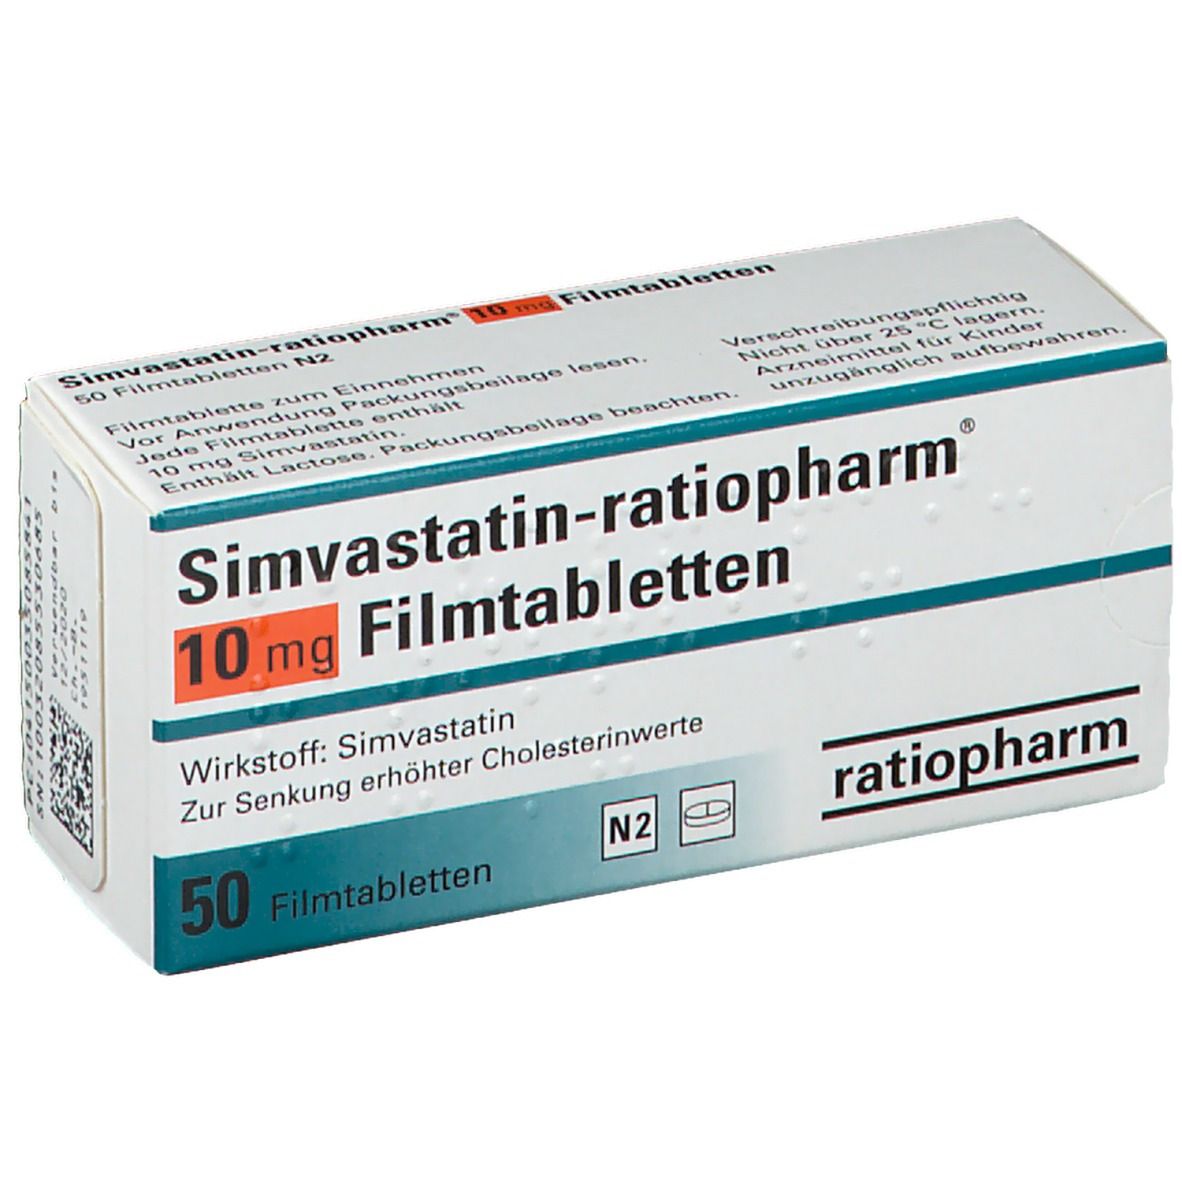 Simvastatin-ratiopharm® 10 mg